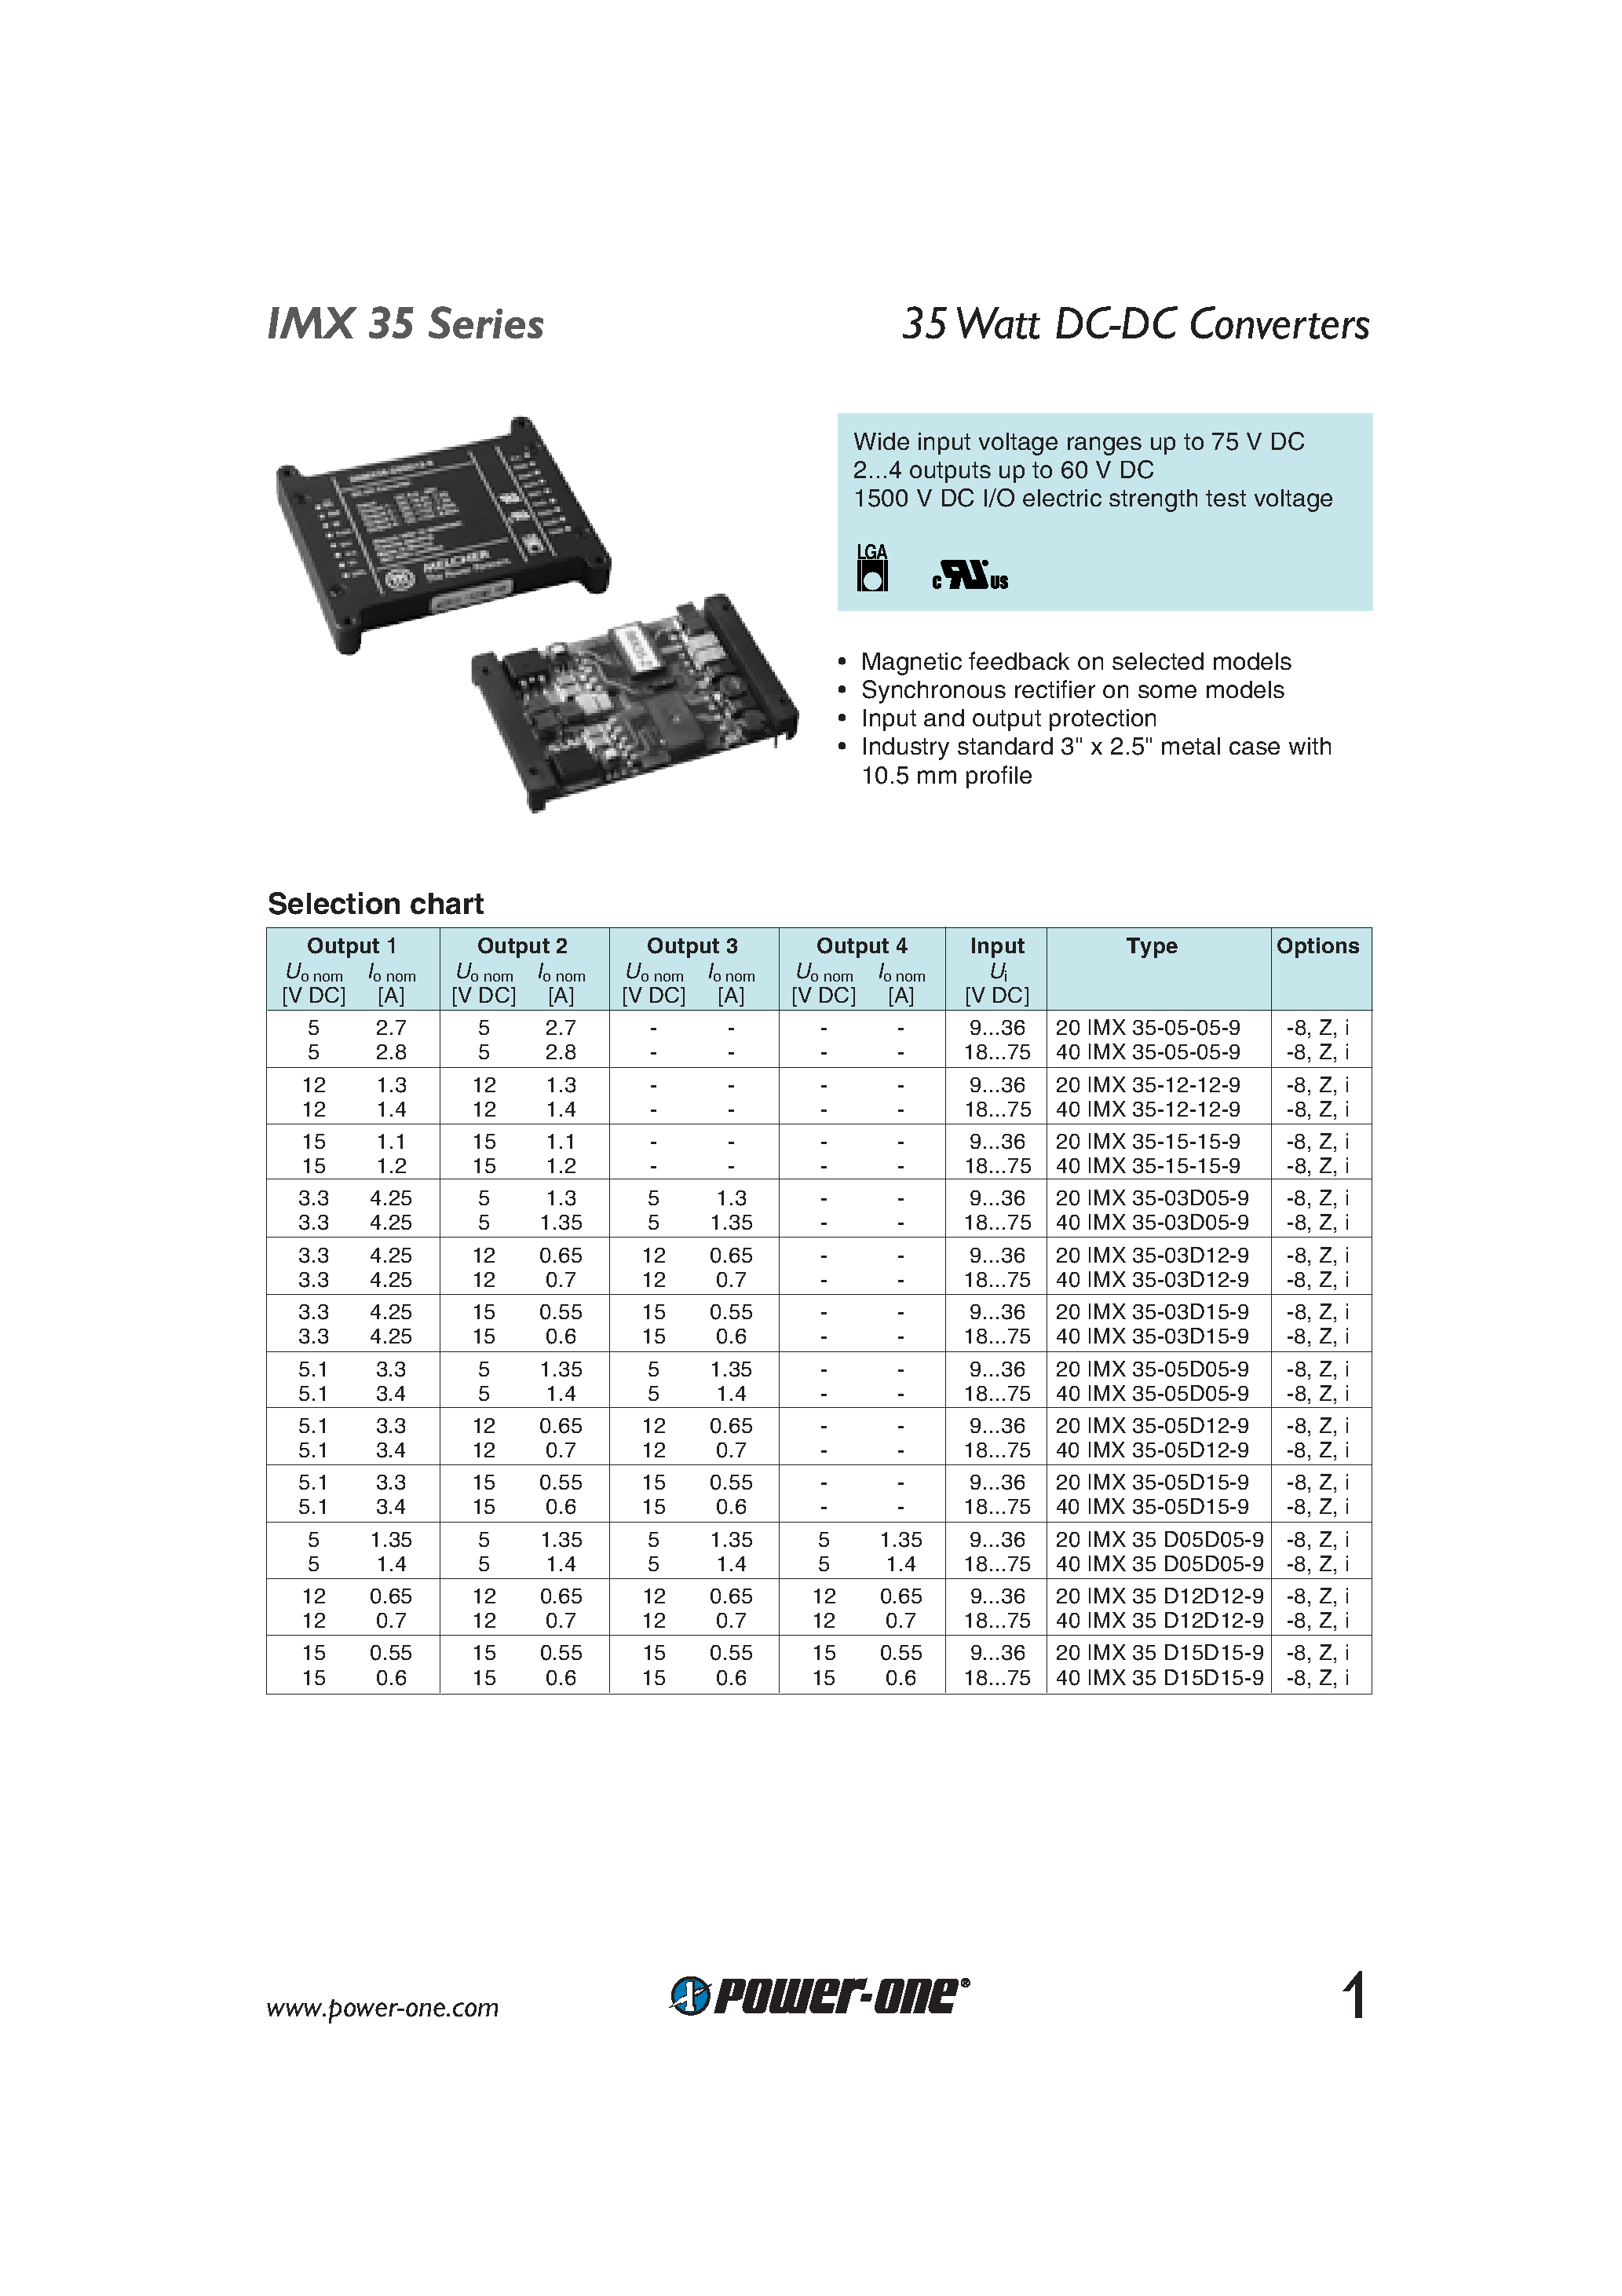 Datasheet 40IMX35-15-15-9 - 35 Watt DC-DC Converters page 1